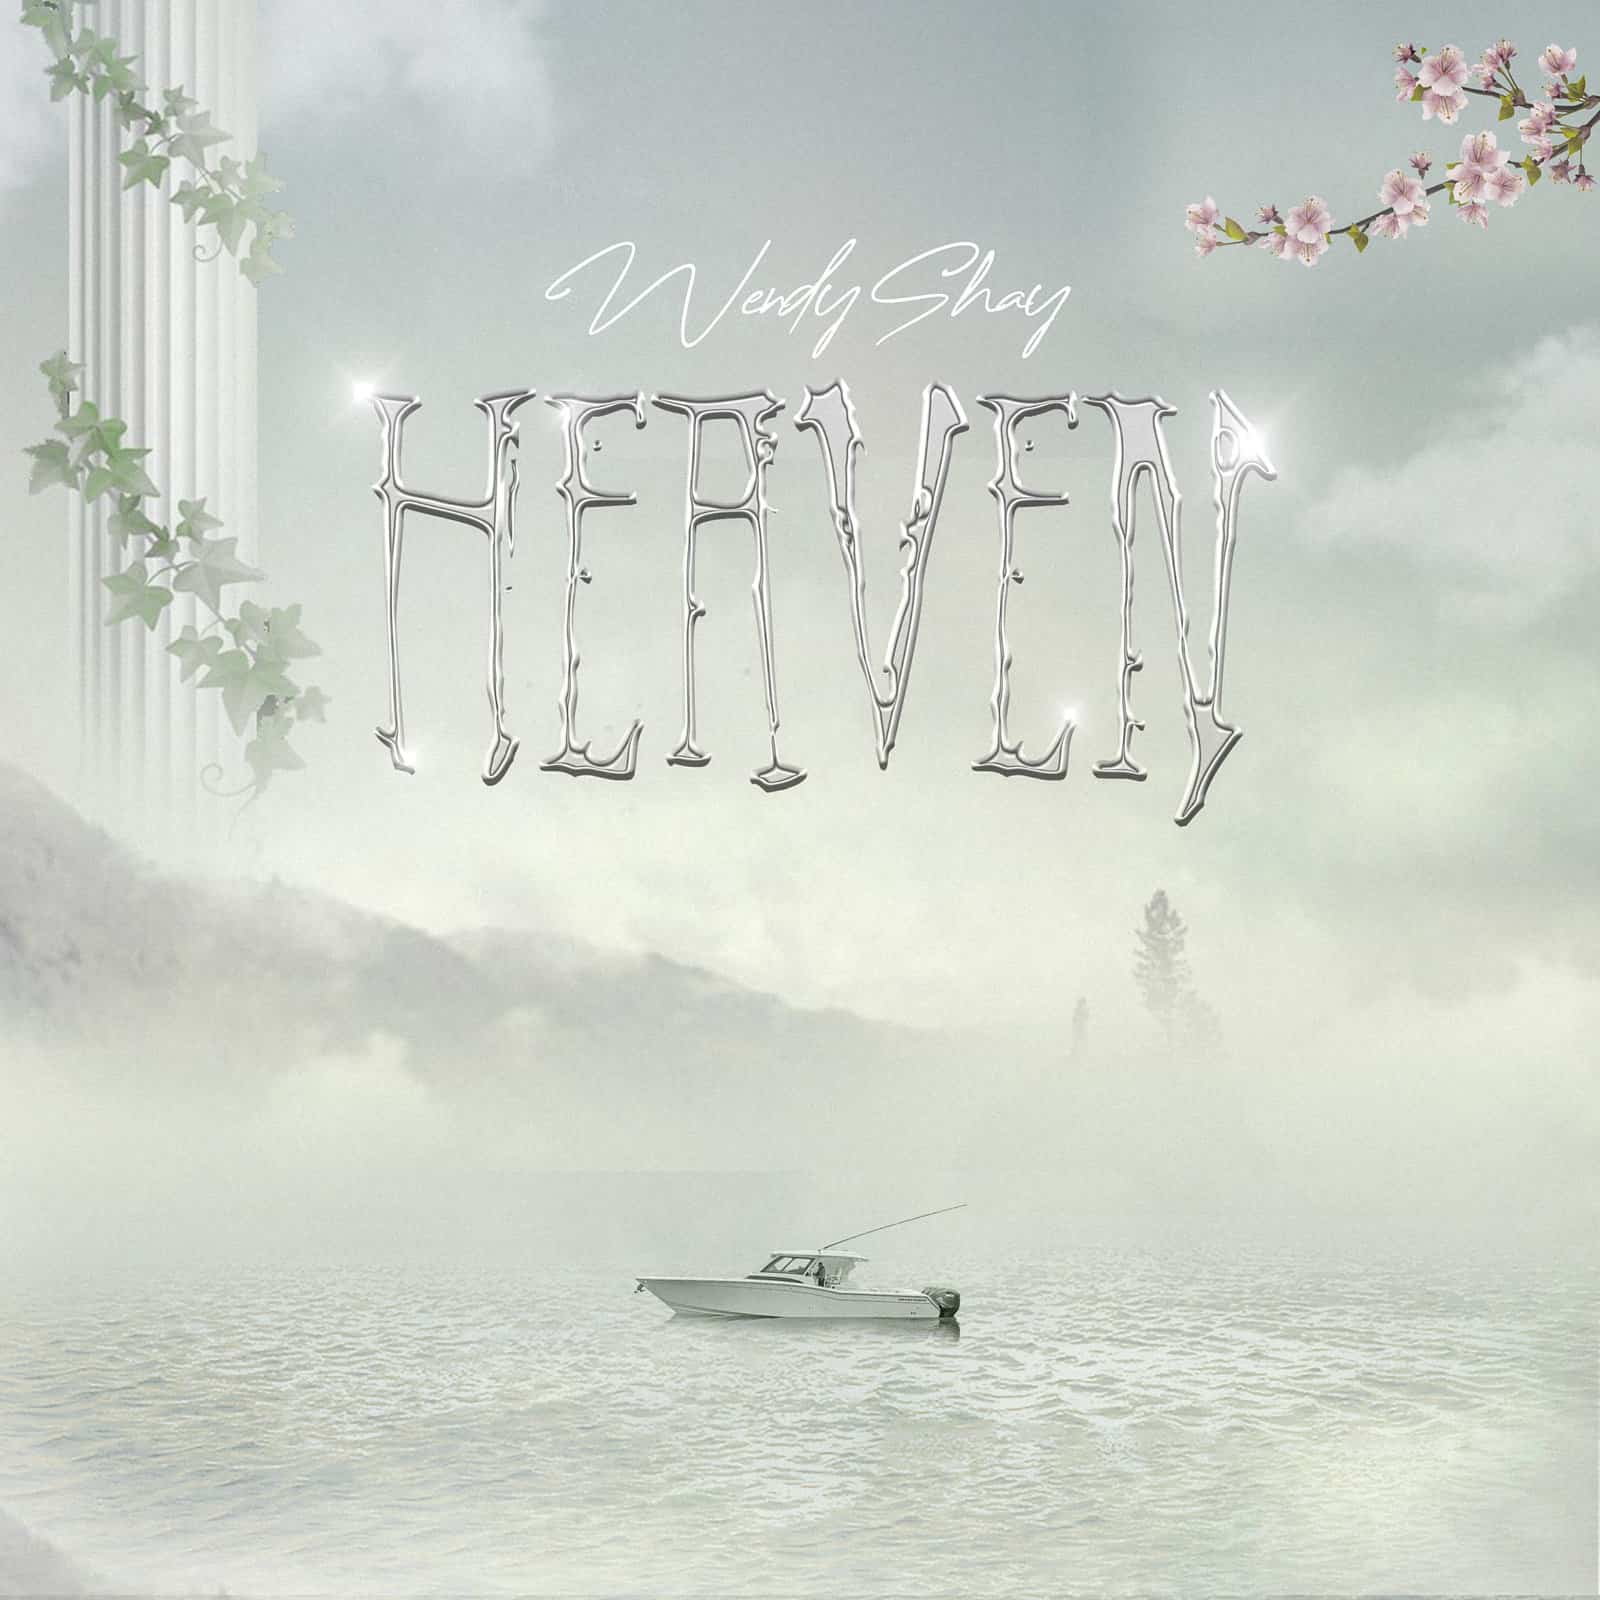 Wendy Shay - Heaven